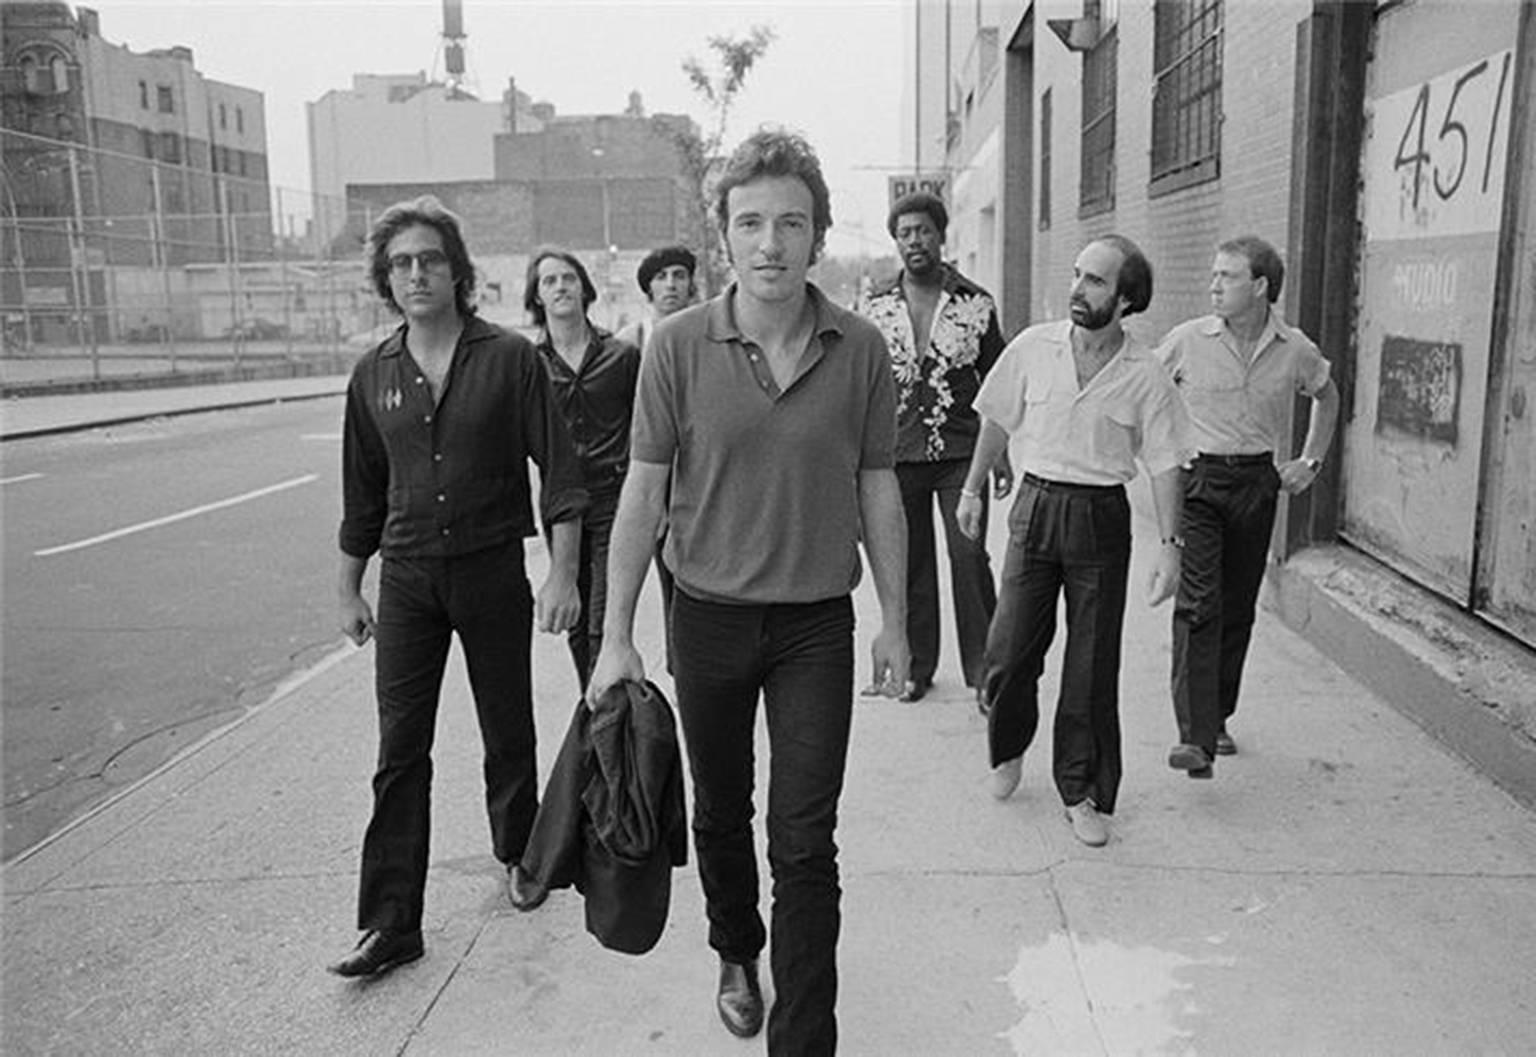 Joel Bernstein Black and White Photograph - Bruce & the E Street Band, “Reservoir Dogs”